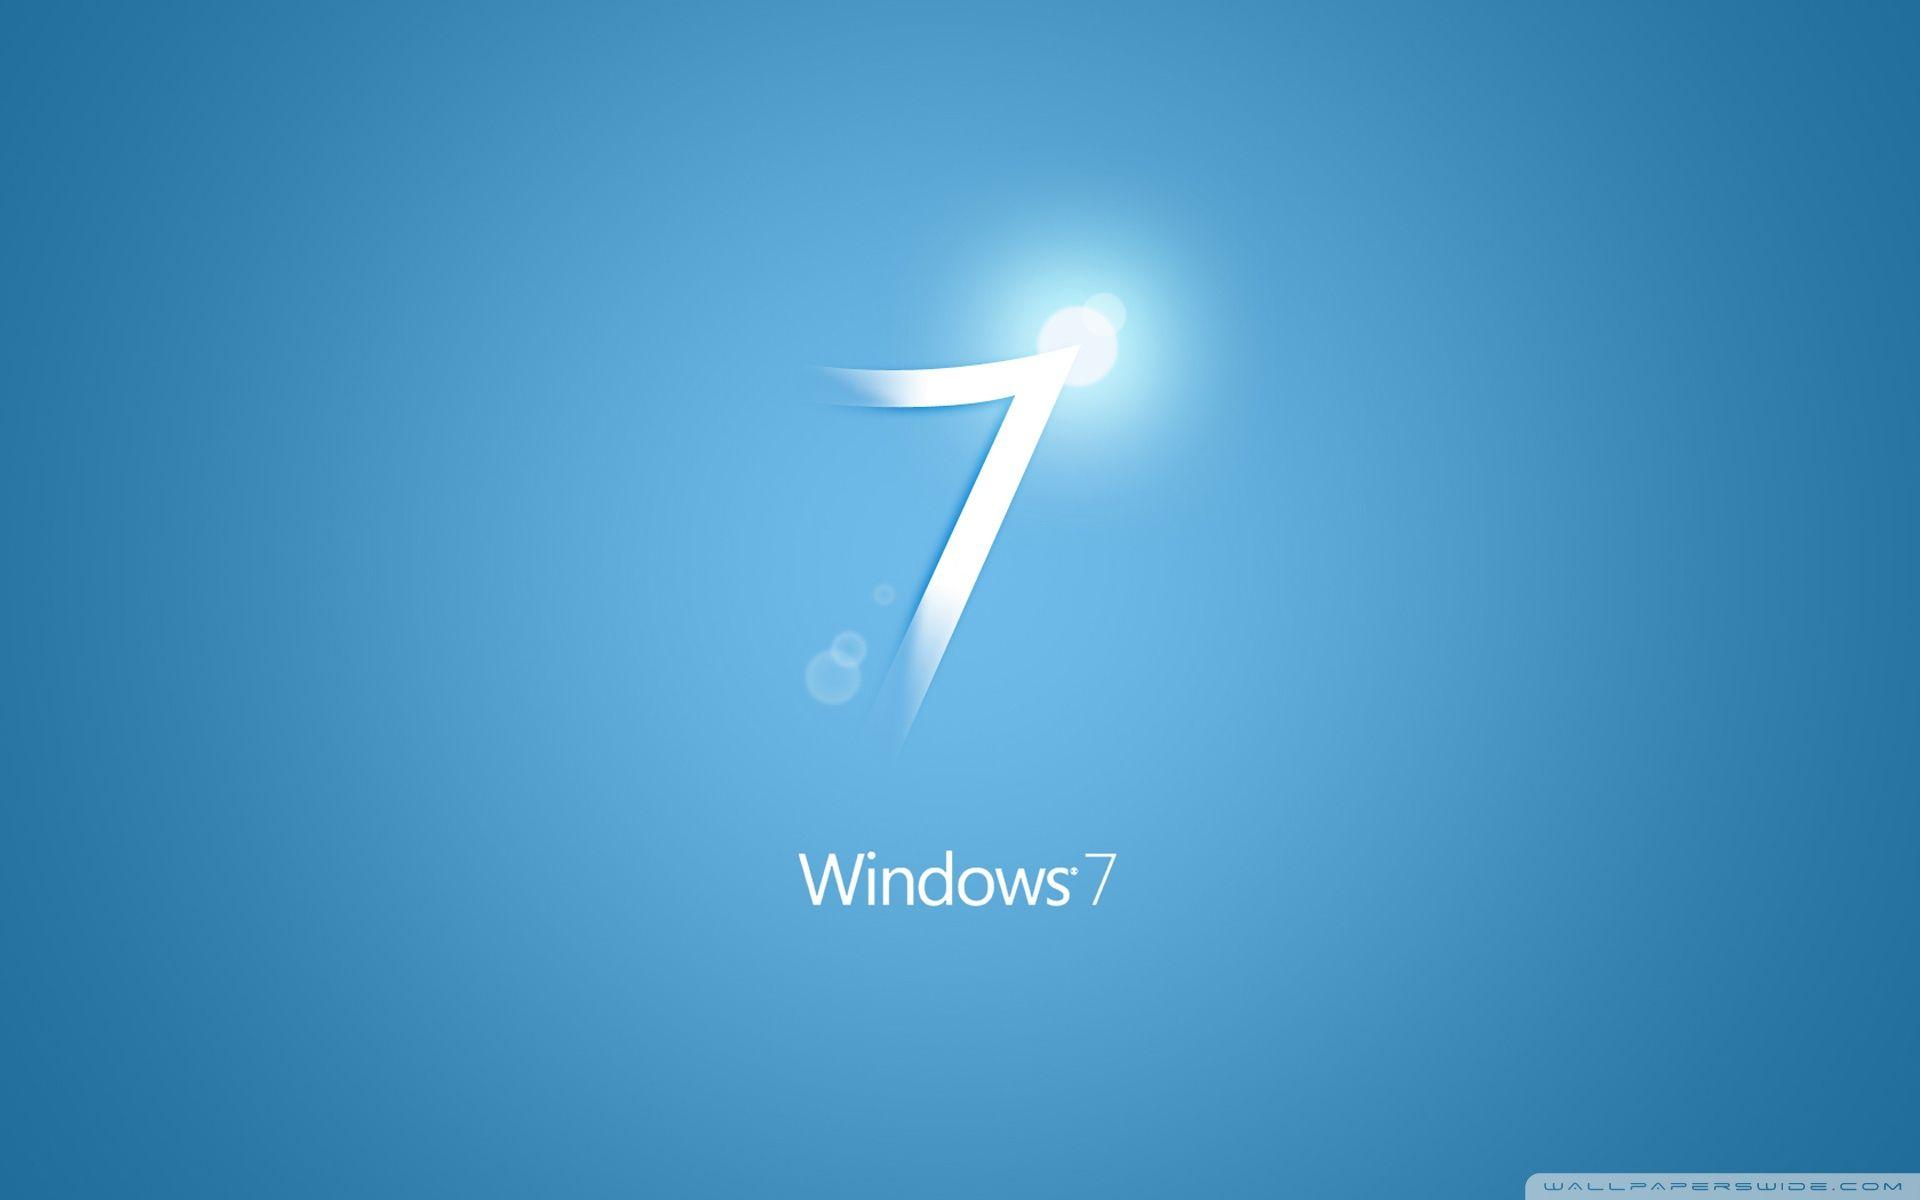 Windows 7 Blue Ultra HD Desktop Background Wallpaper for 4K UHD TV, Widescreen & UltraWide Desktop & Laptop